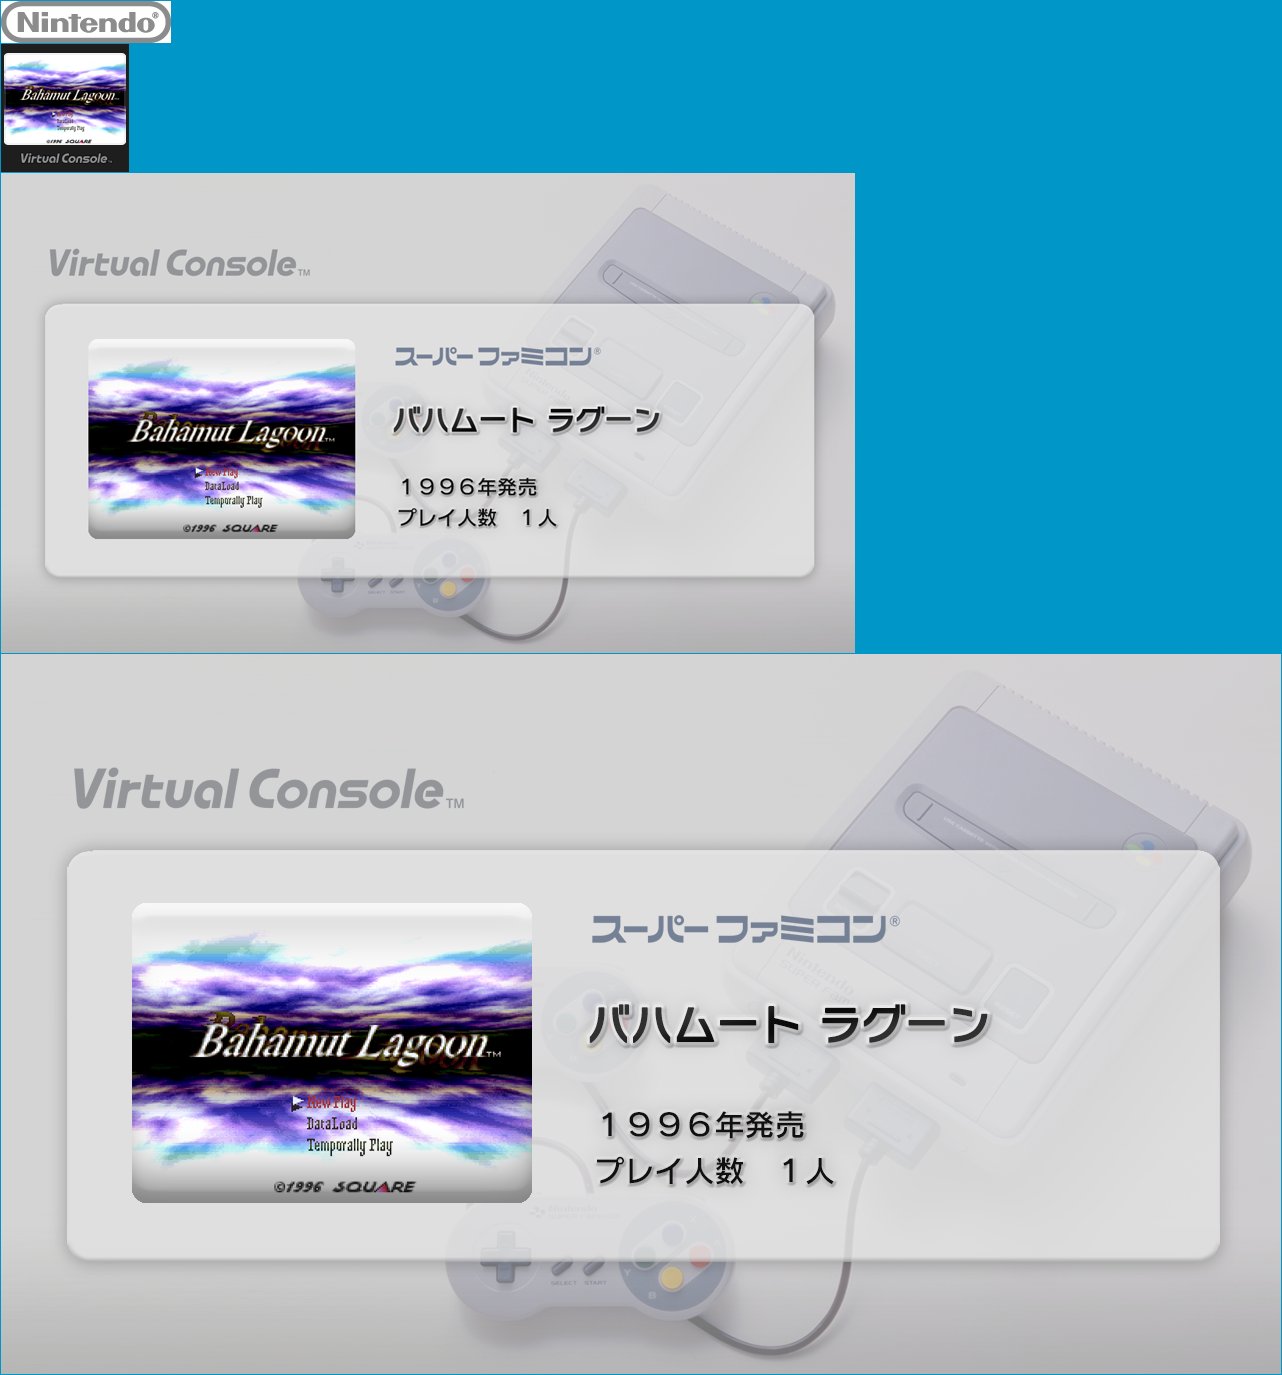 Virtual Console - Bahamut Lagoon